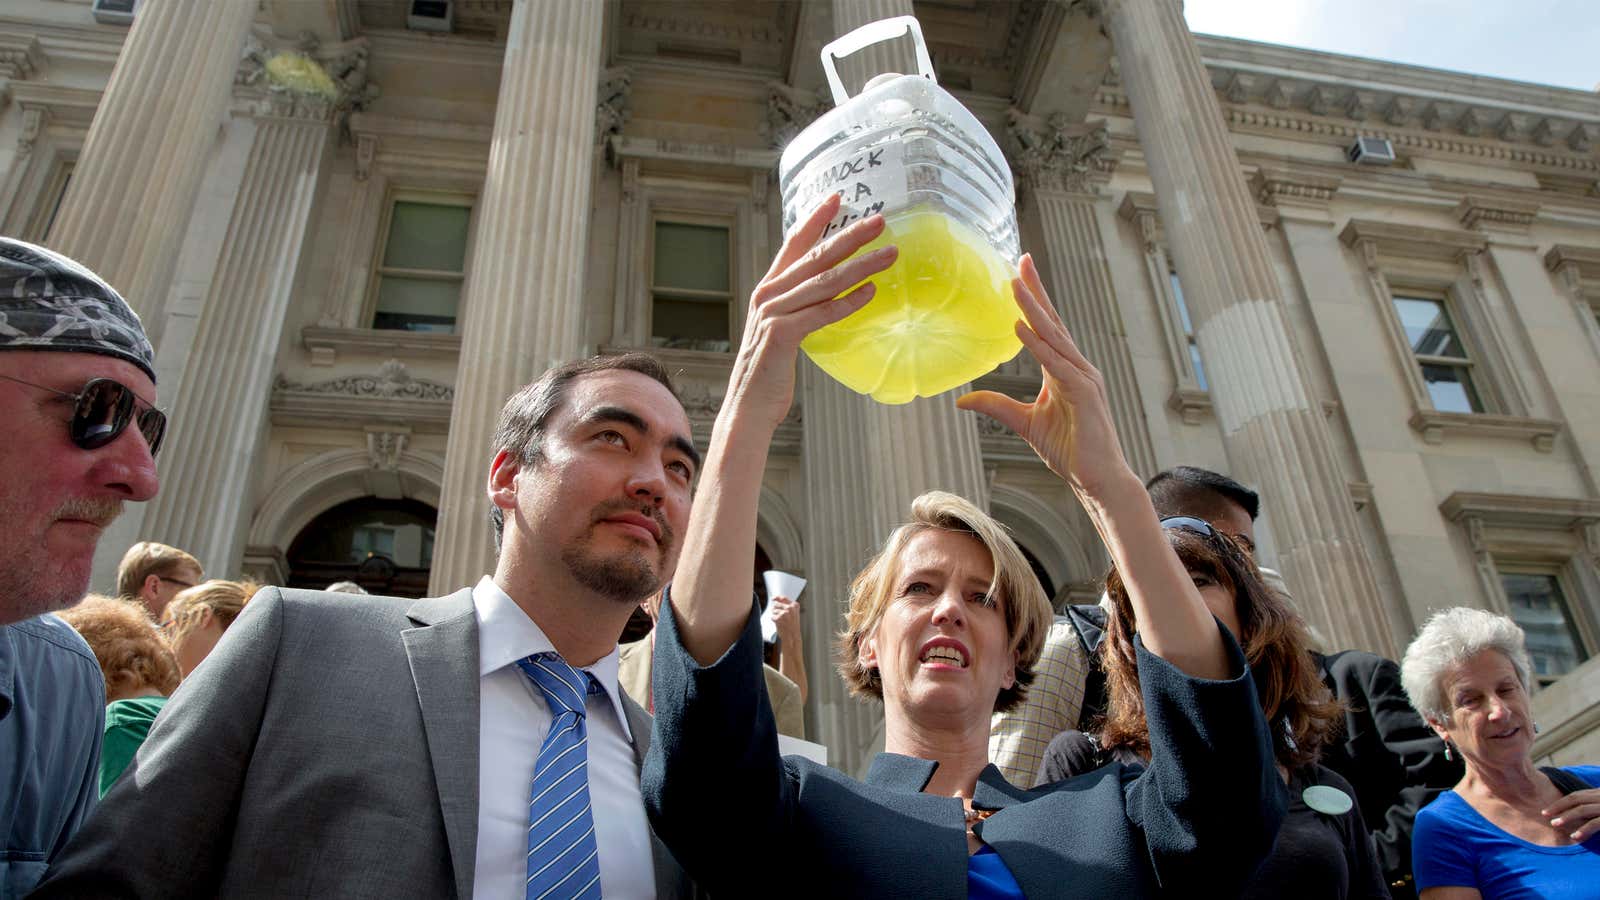 Fear of fracking contamination helped Zephyr Teachout—can it help Bernie Sanders?